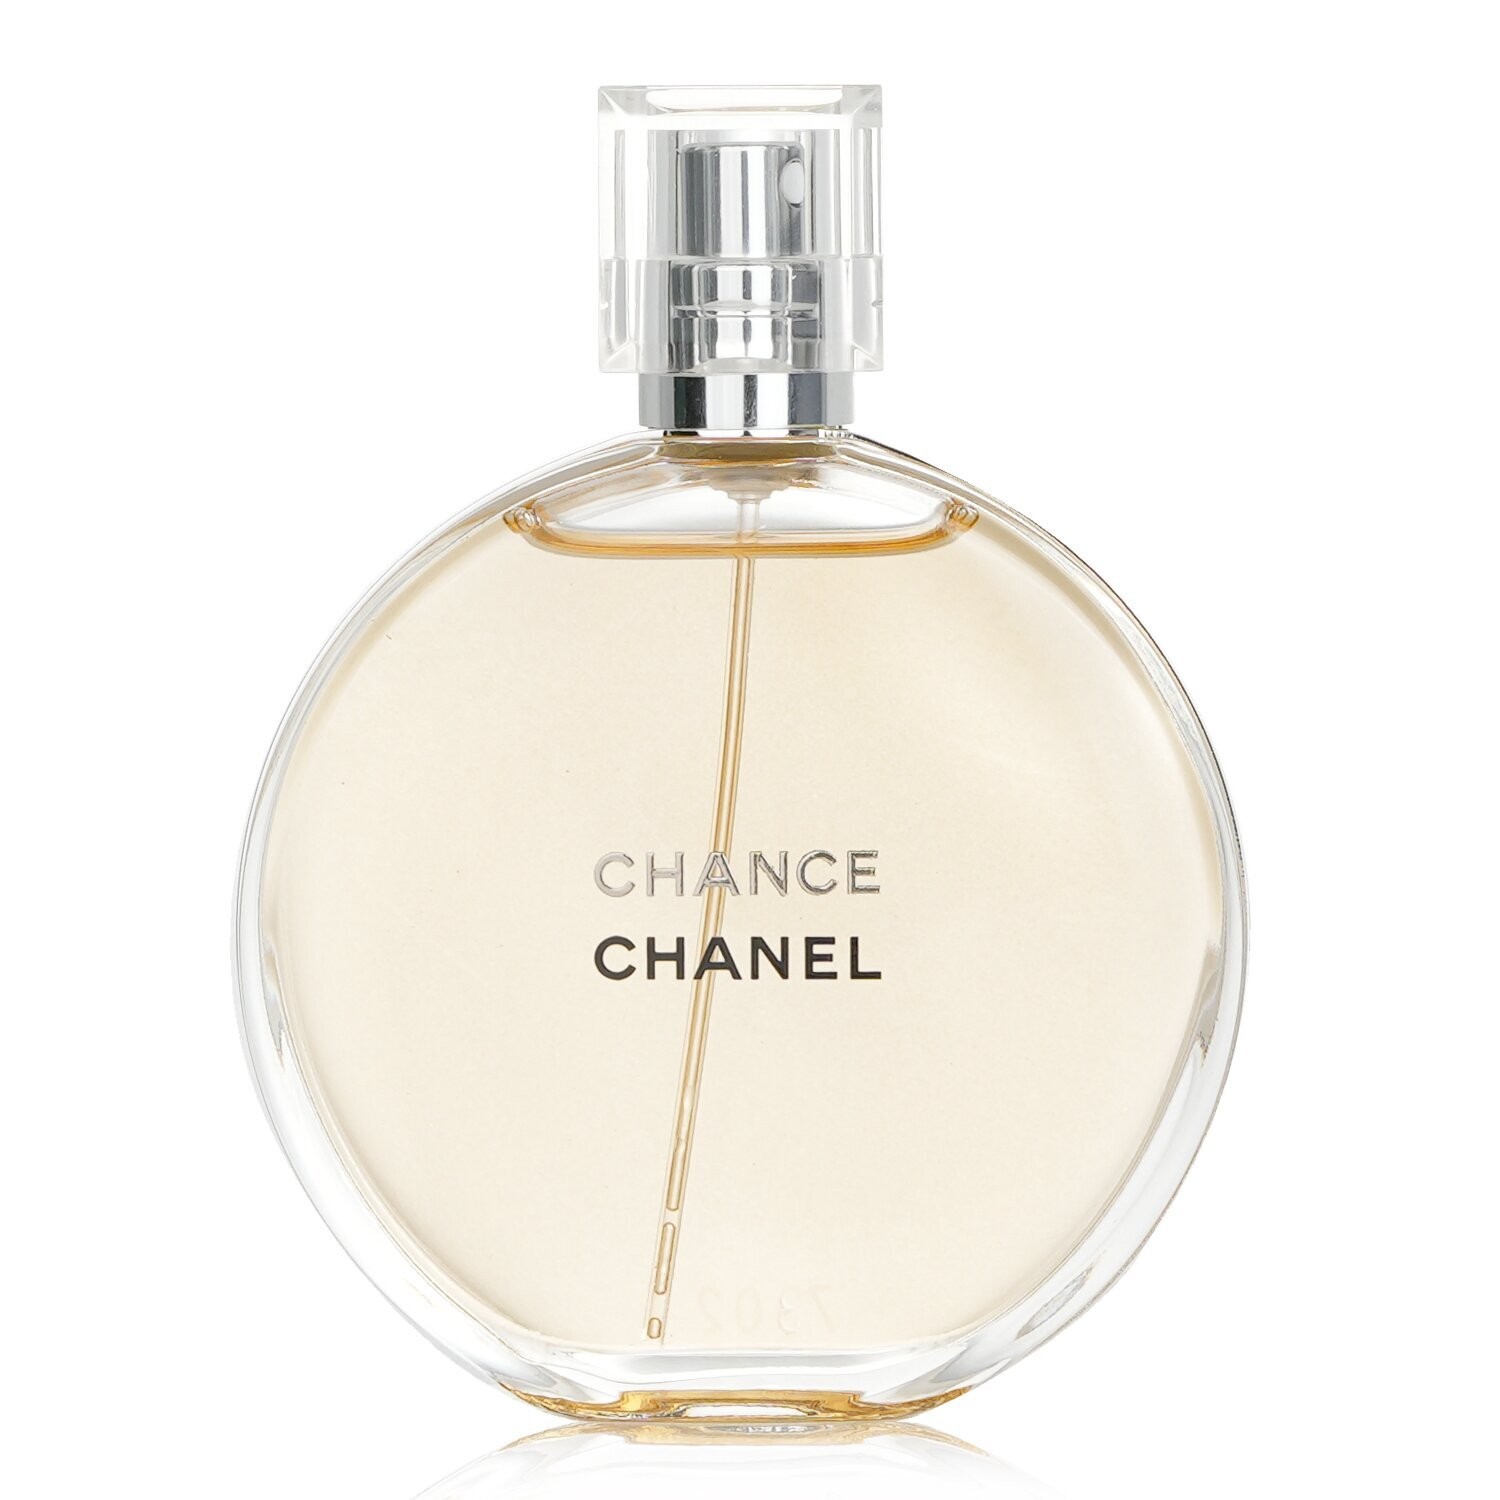 Chanel Chance Eau Tendre EDP Perfume for Women 100ml